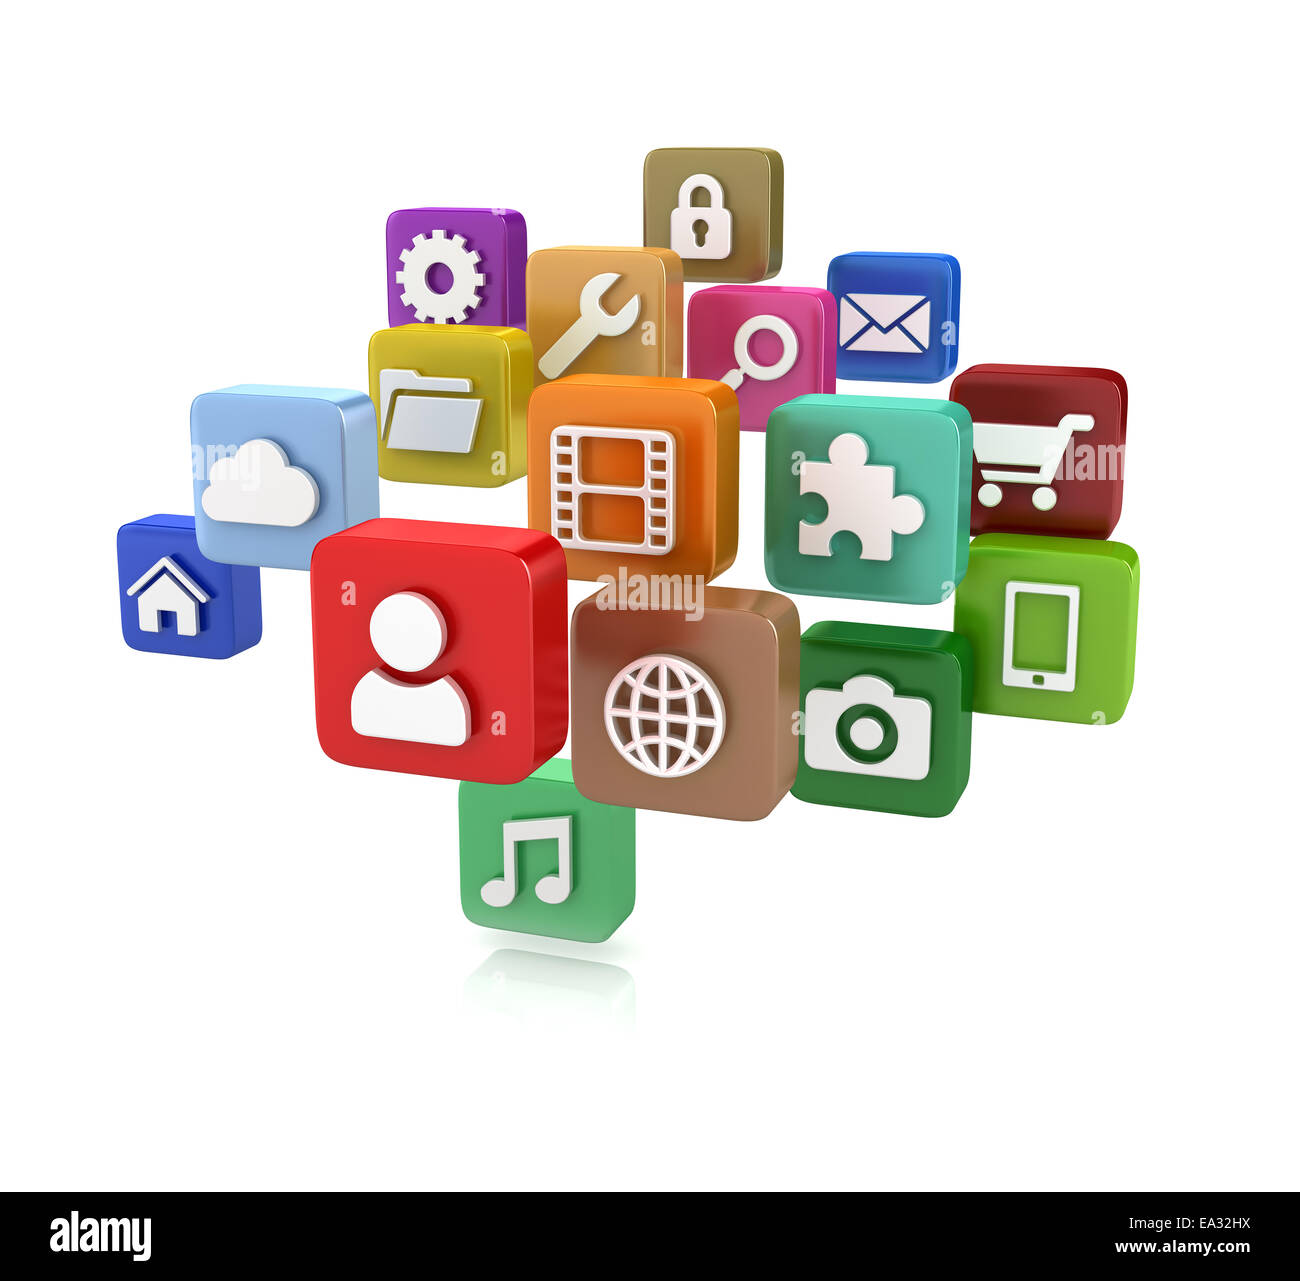 Icônes d'application - Des tablette / icônes mobile app Banque D'Images